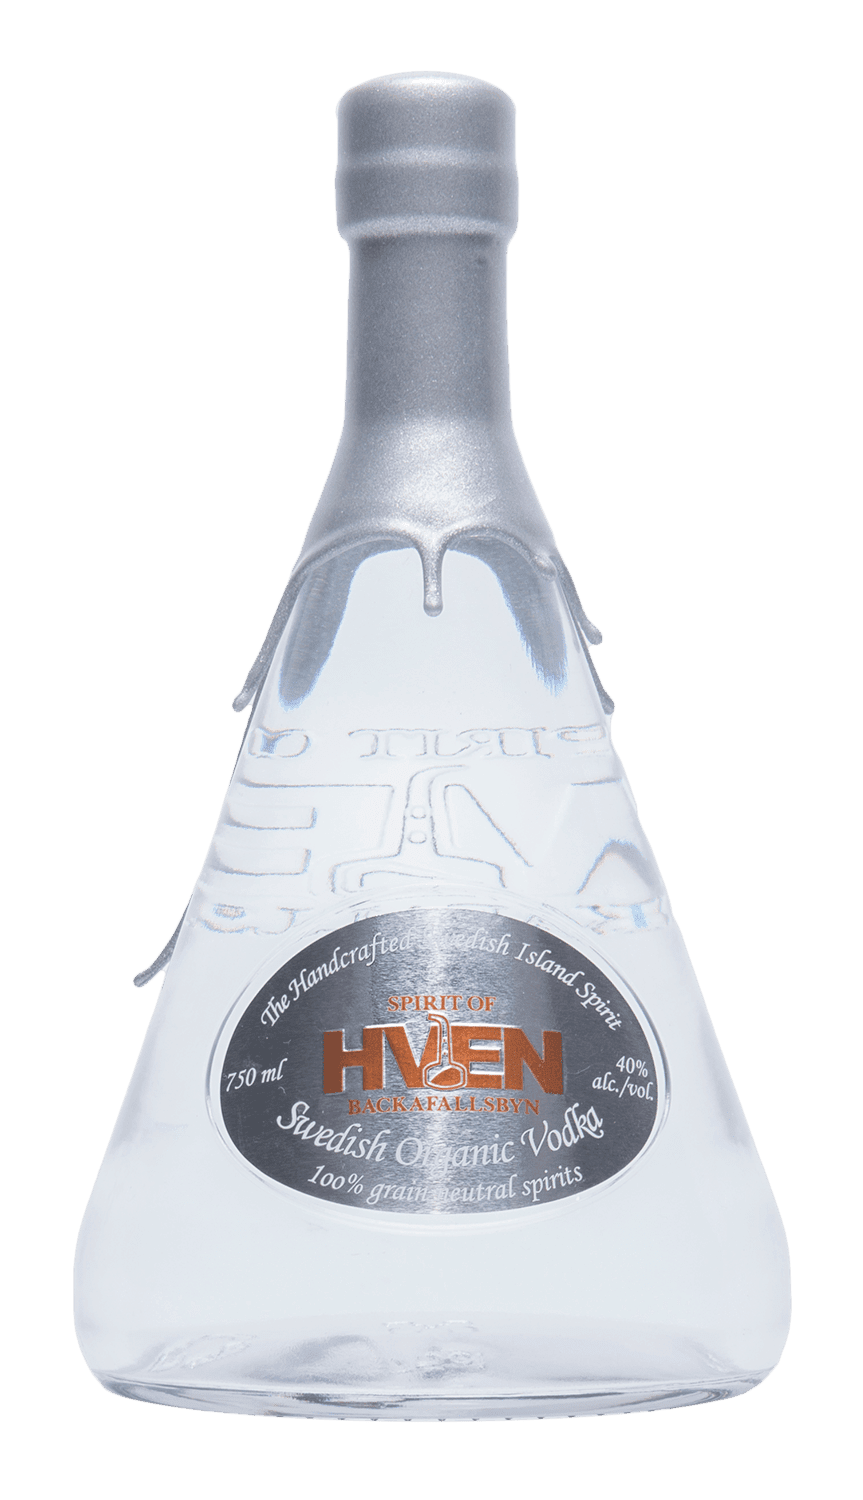 Spirit of Hven Swedish Organic Vodka - Taster's Club